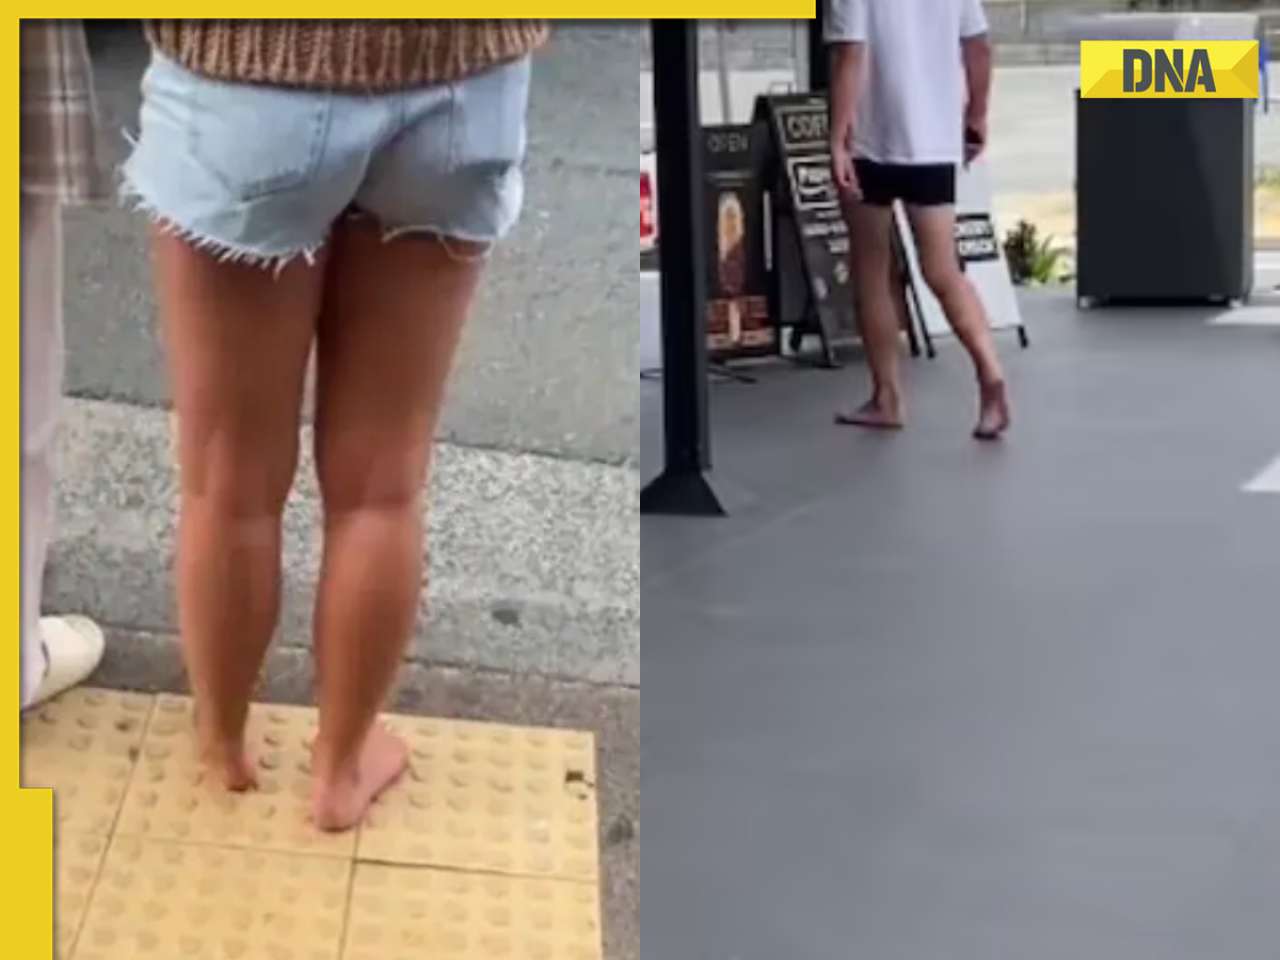 Why Australians walk barefoot in public: Here’s the reason